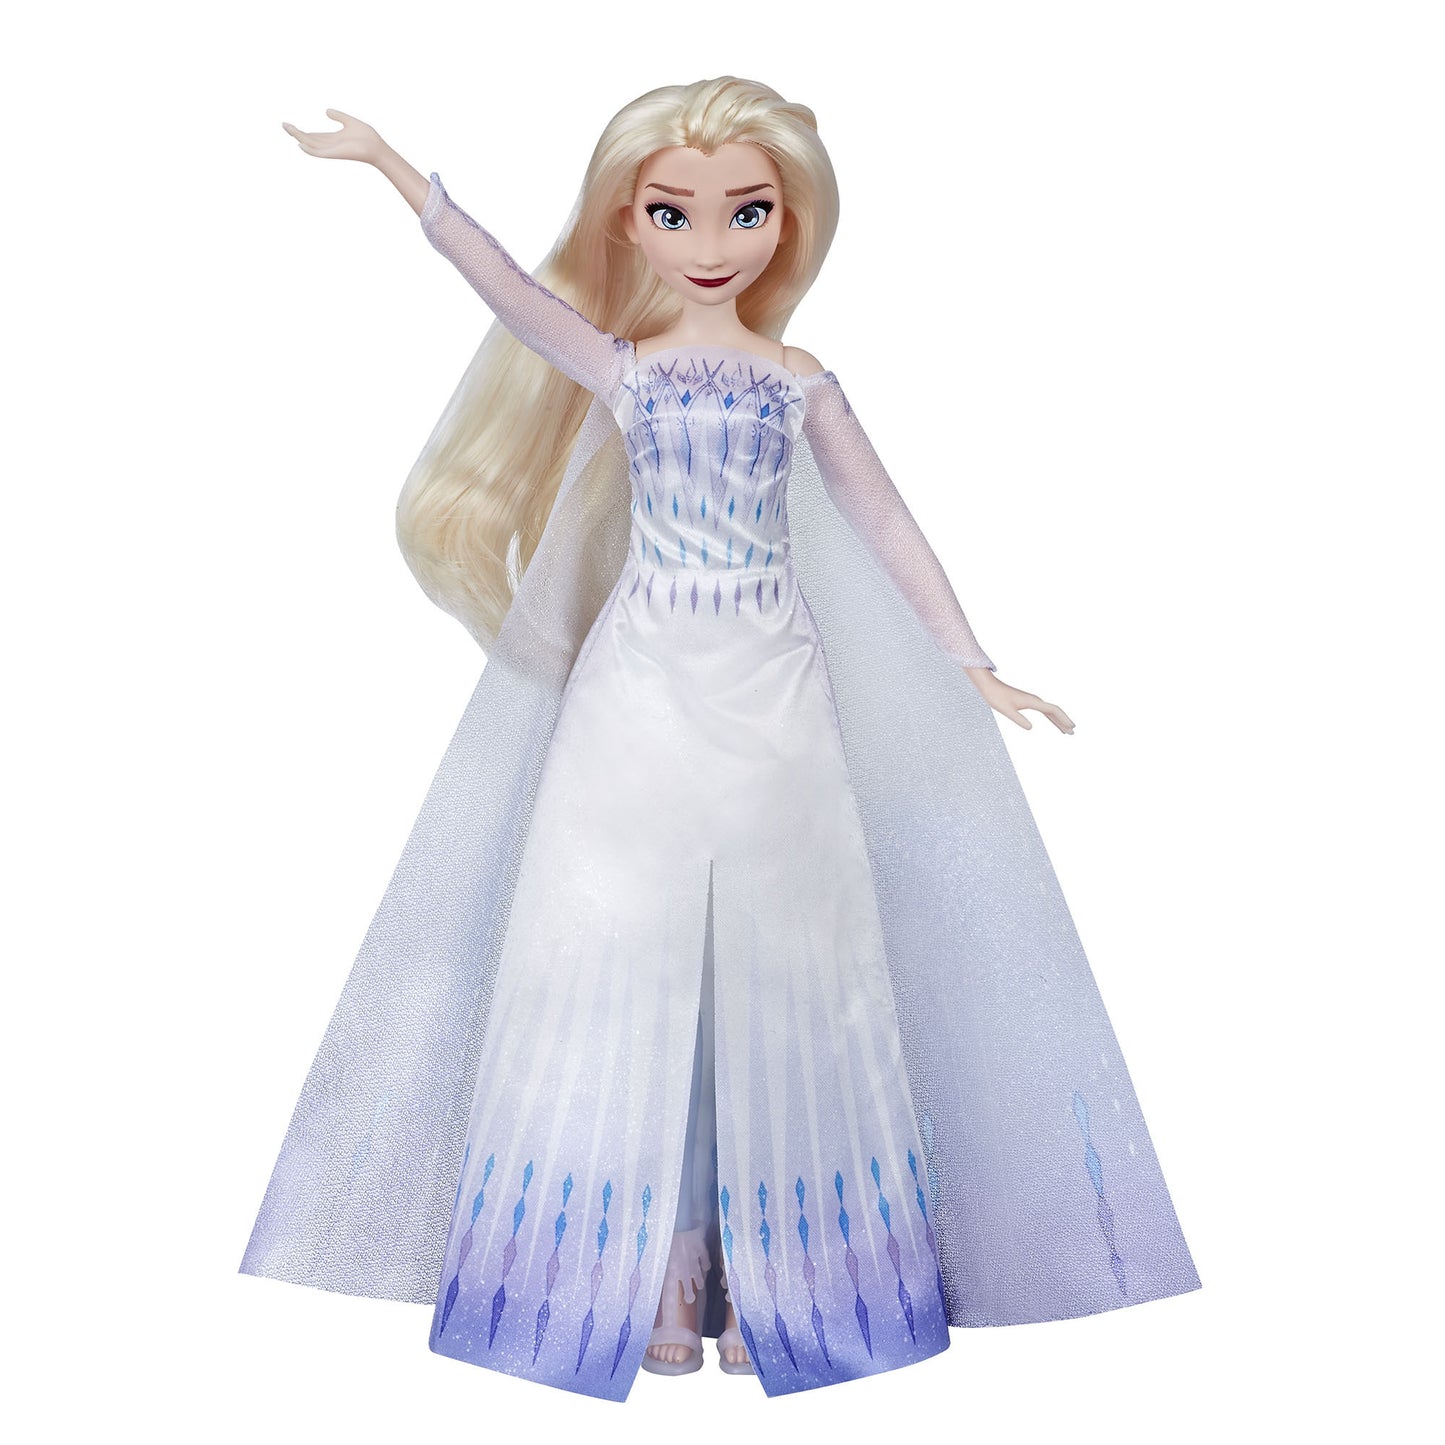 Disney Frozen Singing Fashion Music Dolls Assortment - Singing Elsa, Singing Anna, Adventure Anna